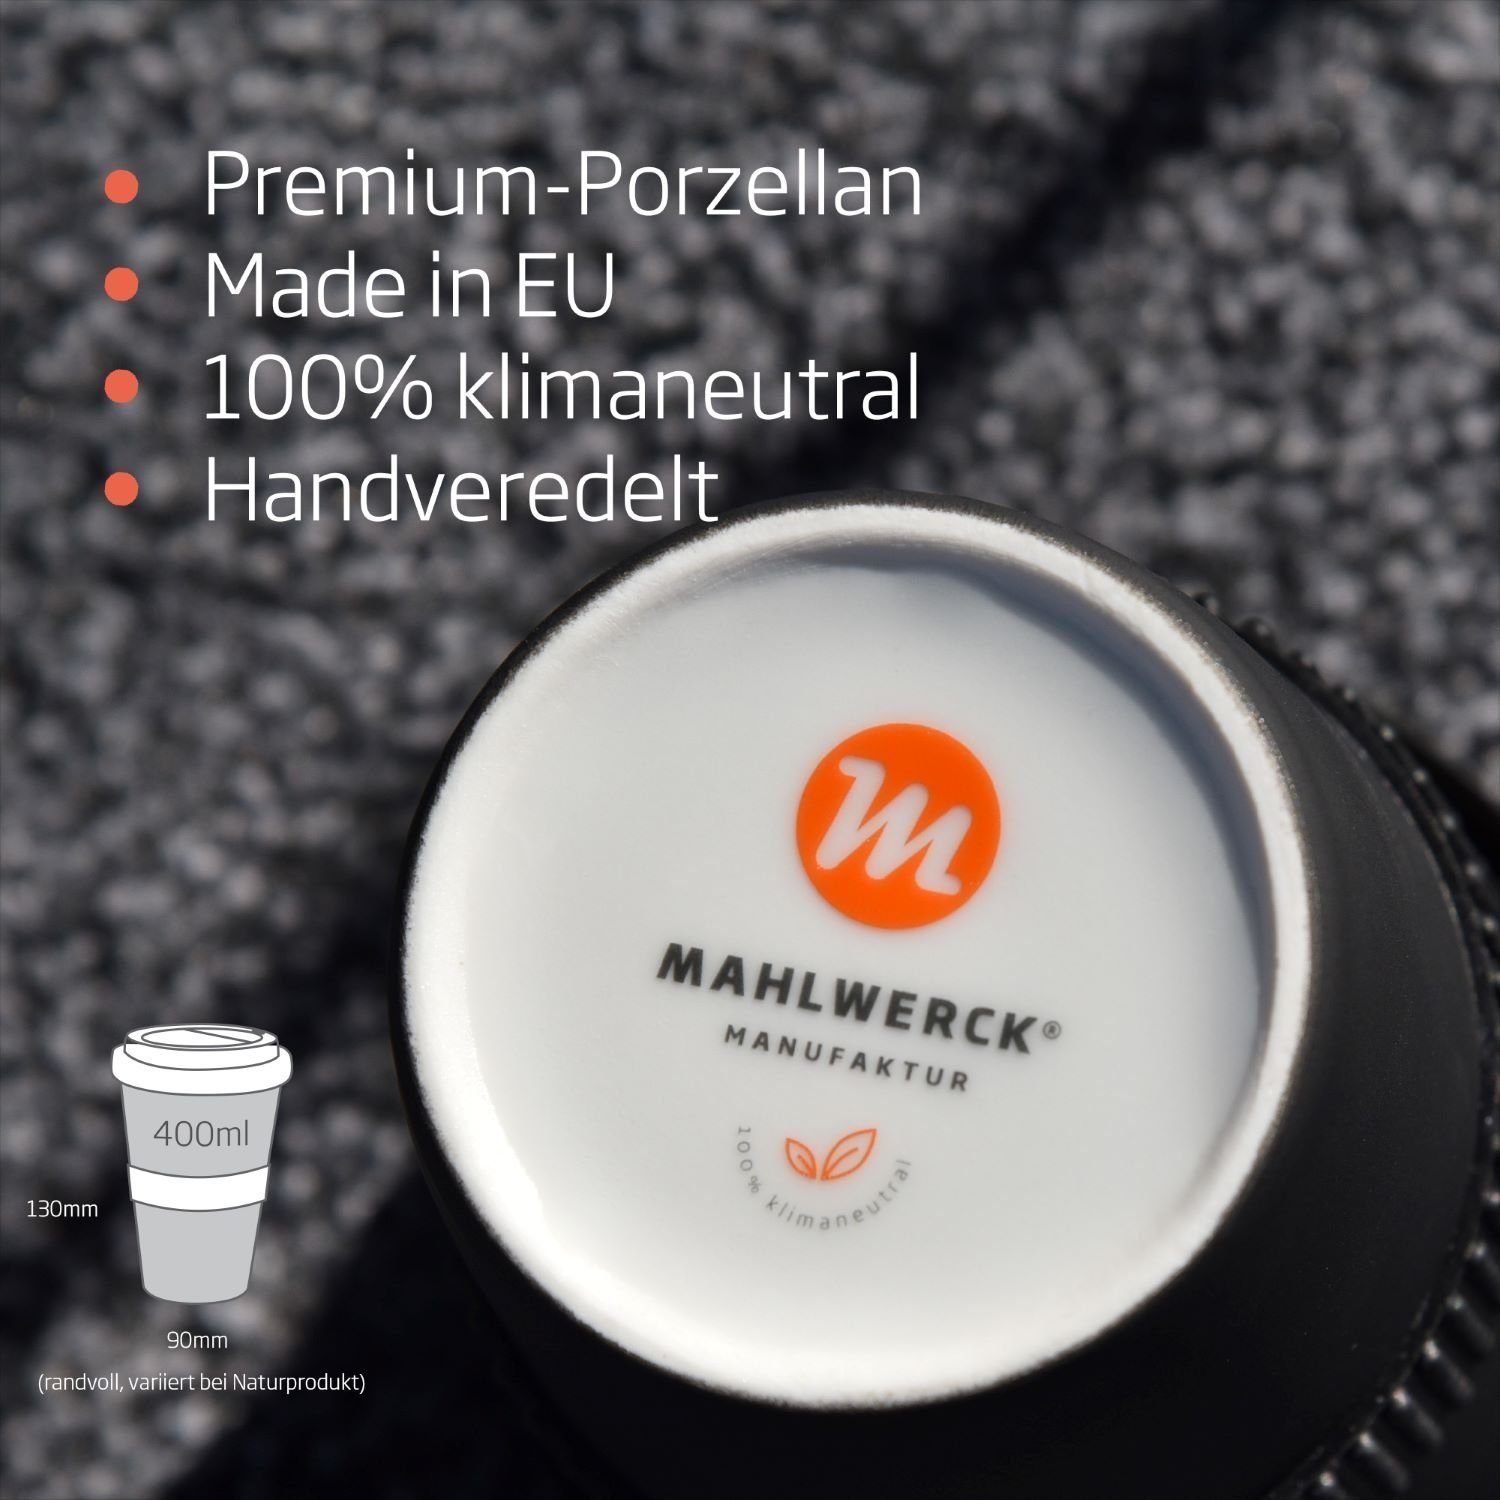 Mahlwerck Manufaktur Coffee-to-go-Becher Limited ml, klimaneutral Edition Deckel, auslaufsicher, 400 + Prorzellan, Violet Becher 100% spülmaschinengeeignet, Shiny